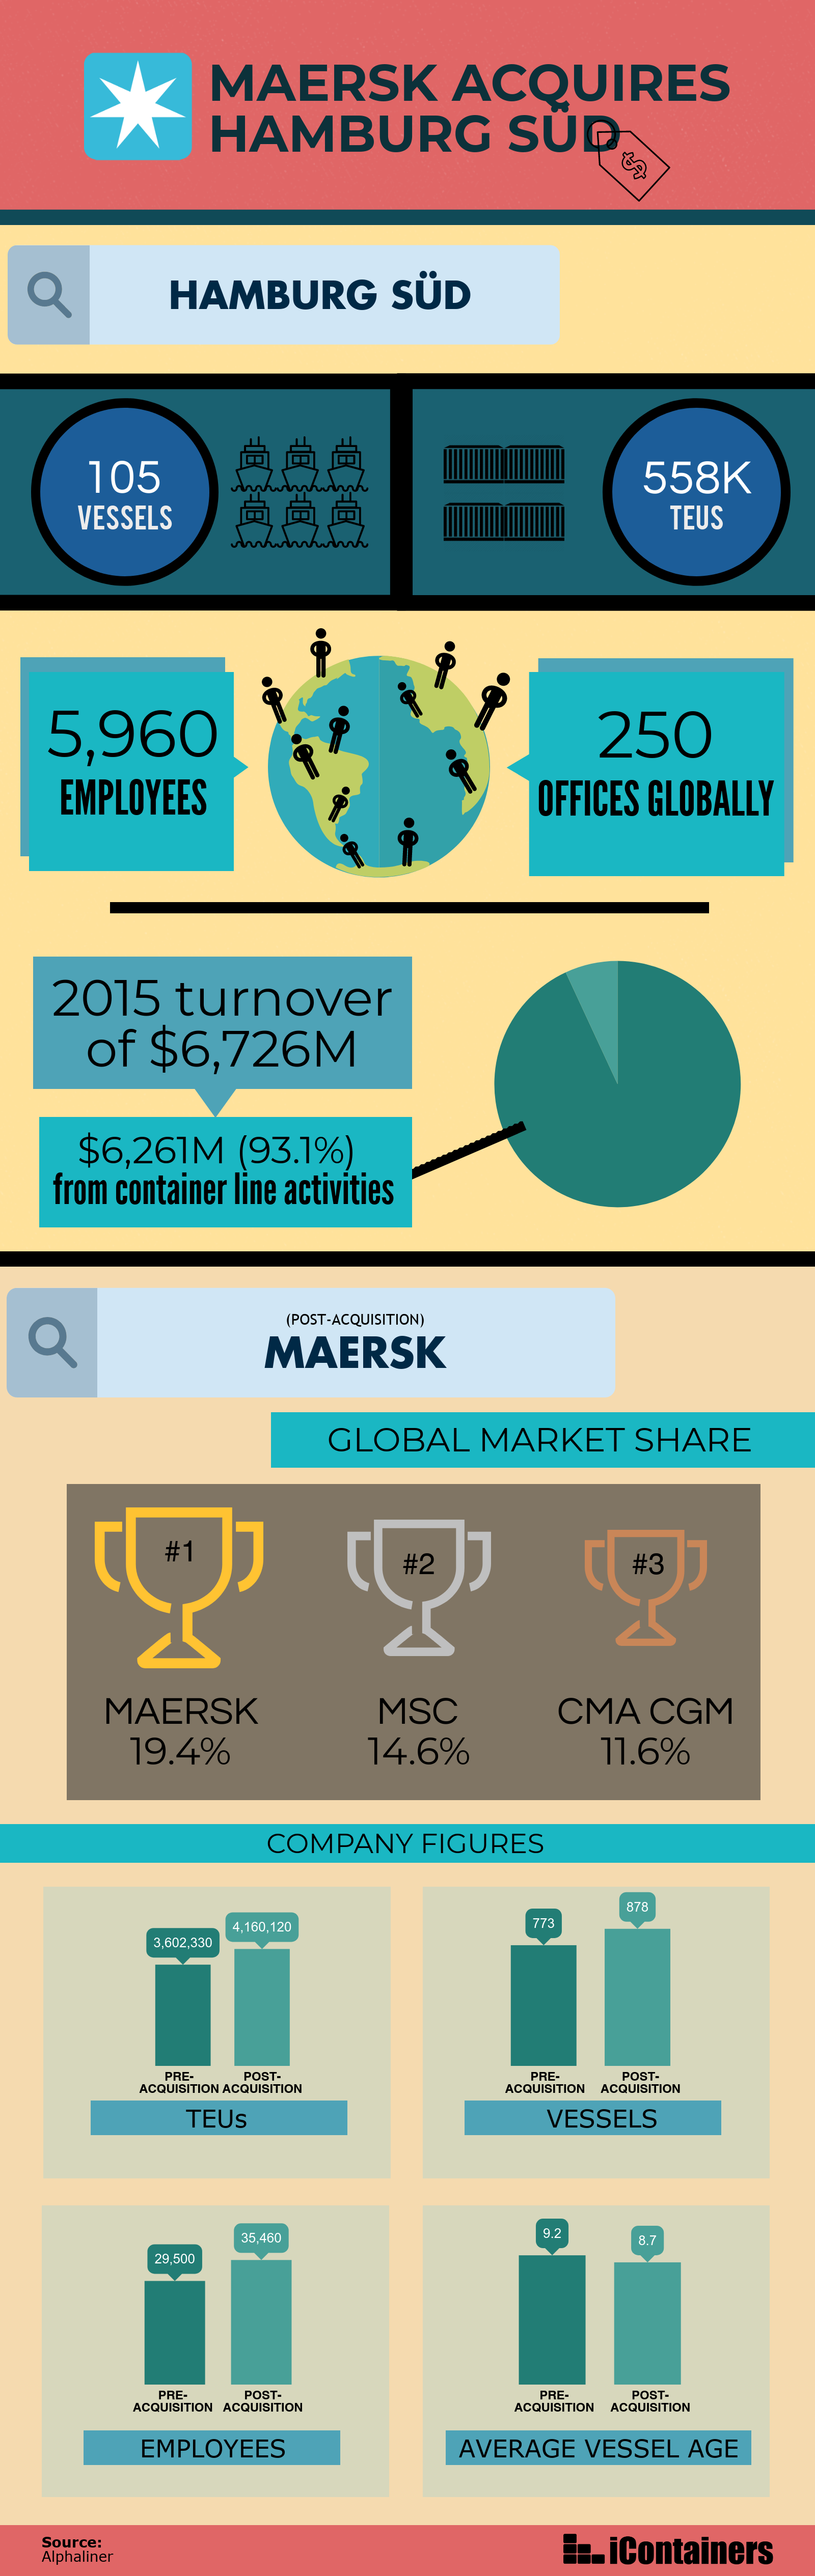 maersk-hamburg-infographic.png